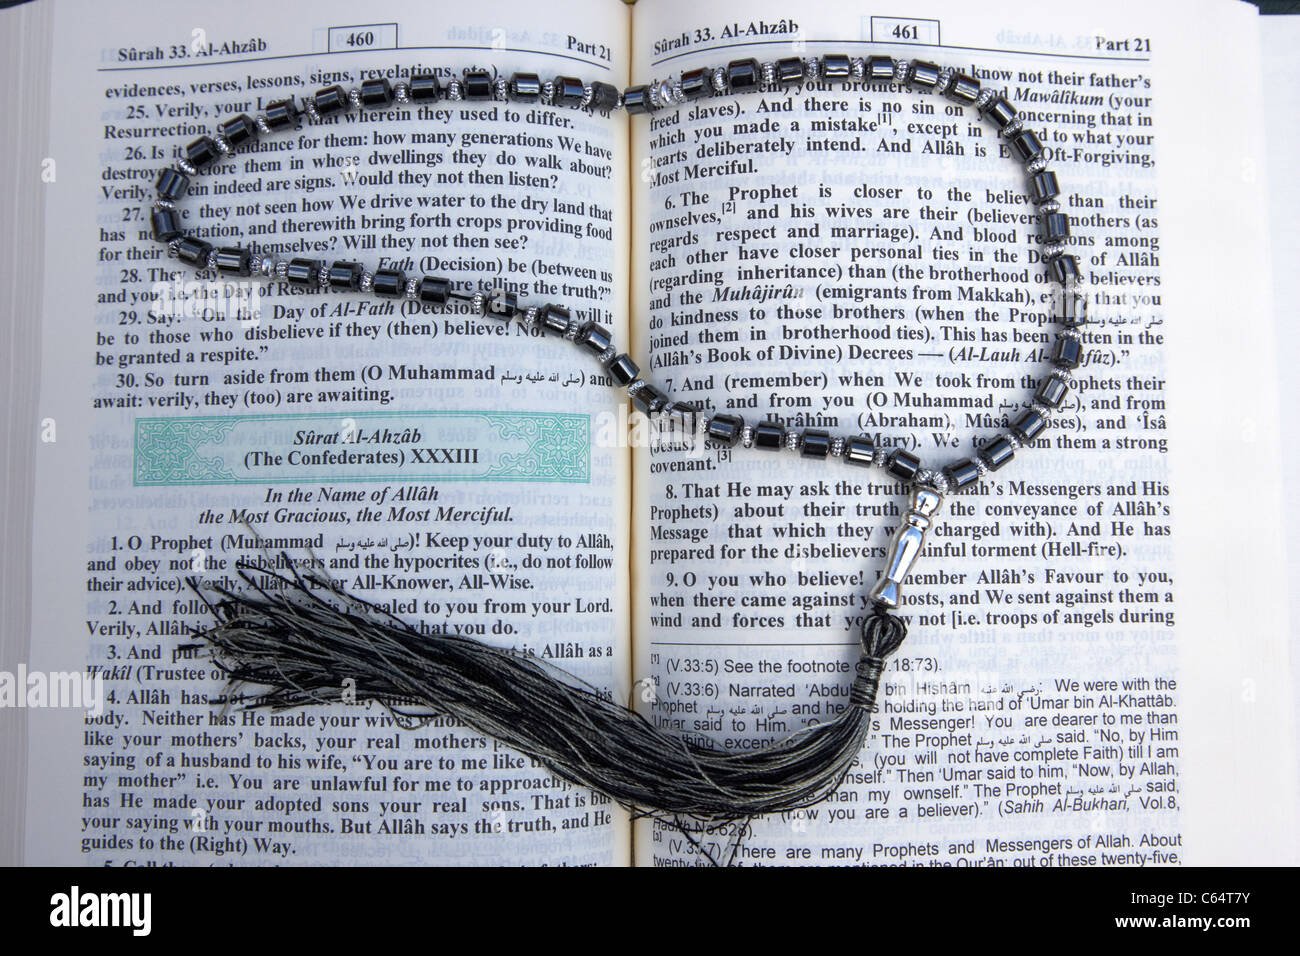 noble holy koran translated english version with prayer beads Stock Photo